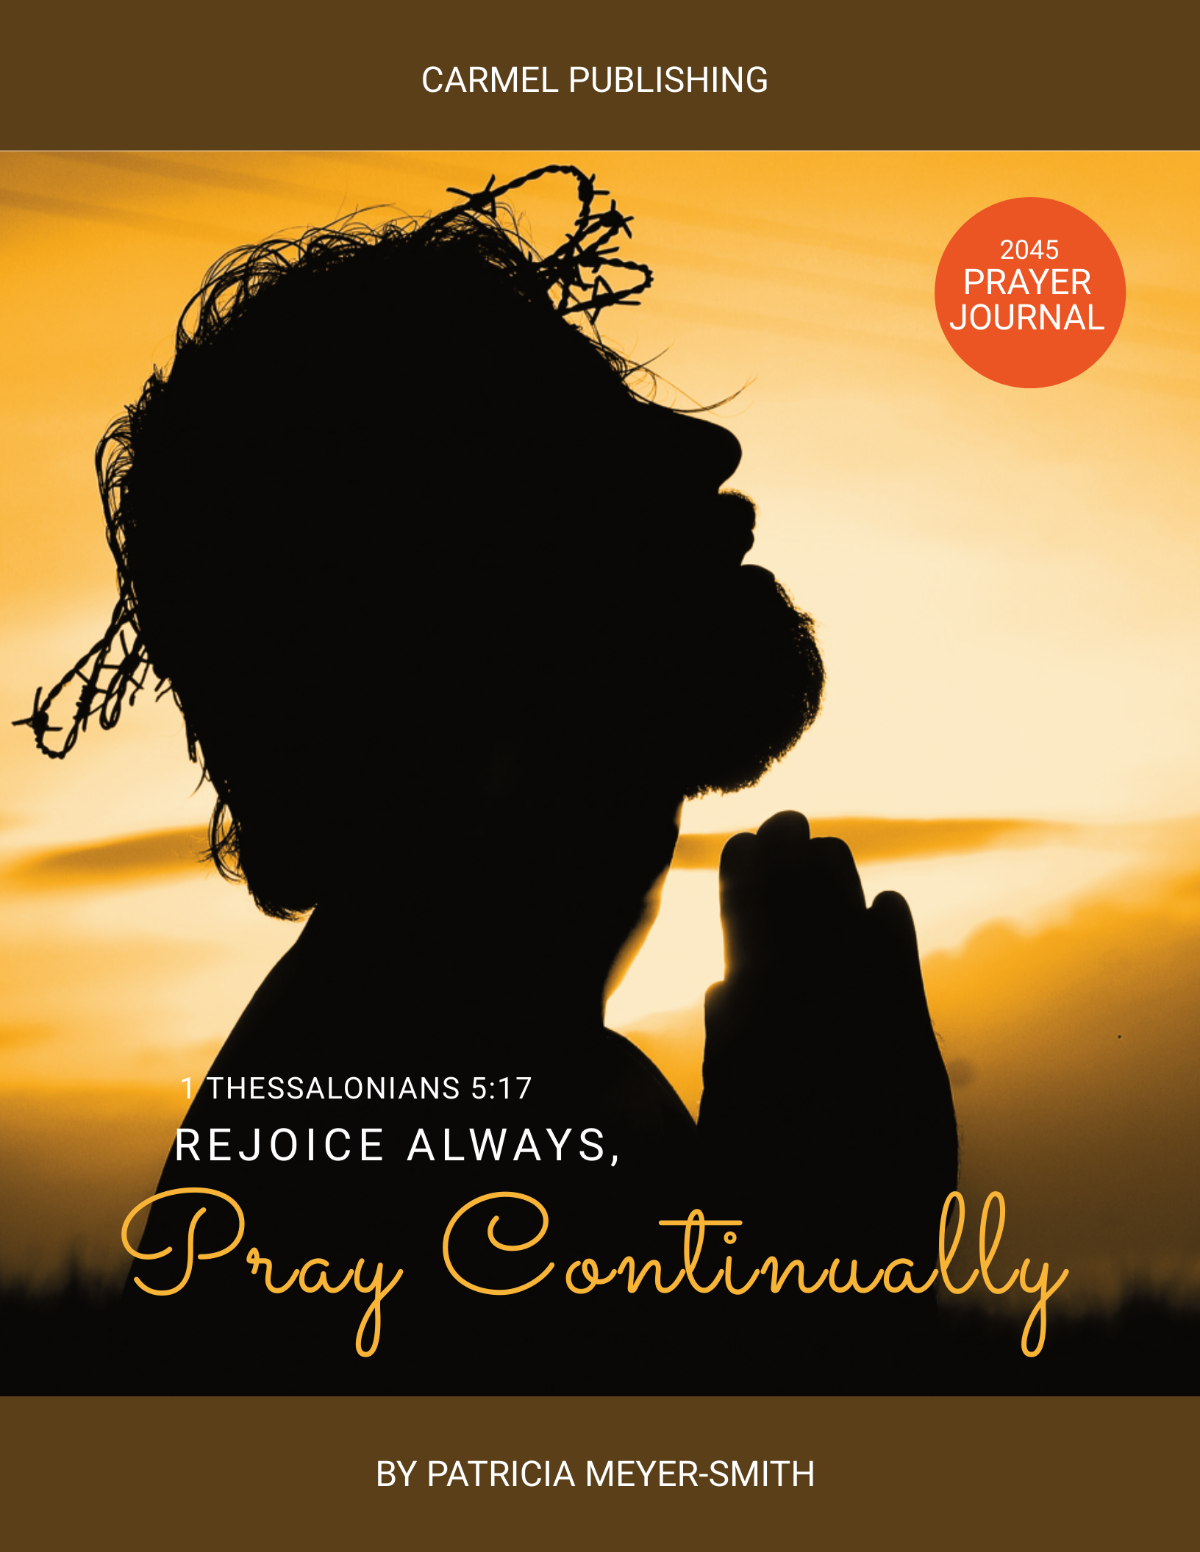 Prayer Journal Book Cover Template